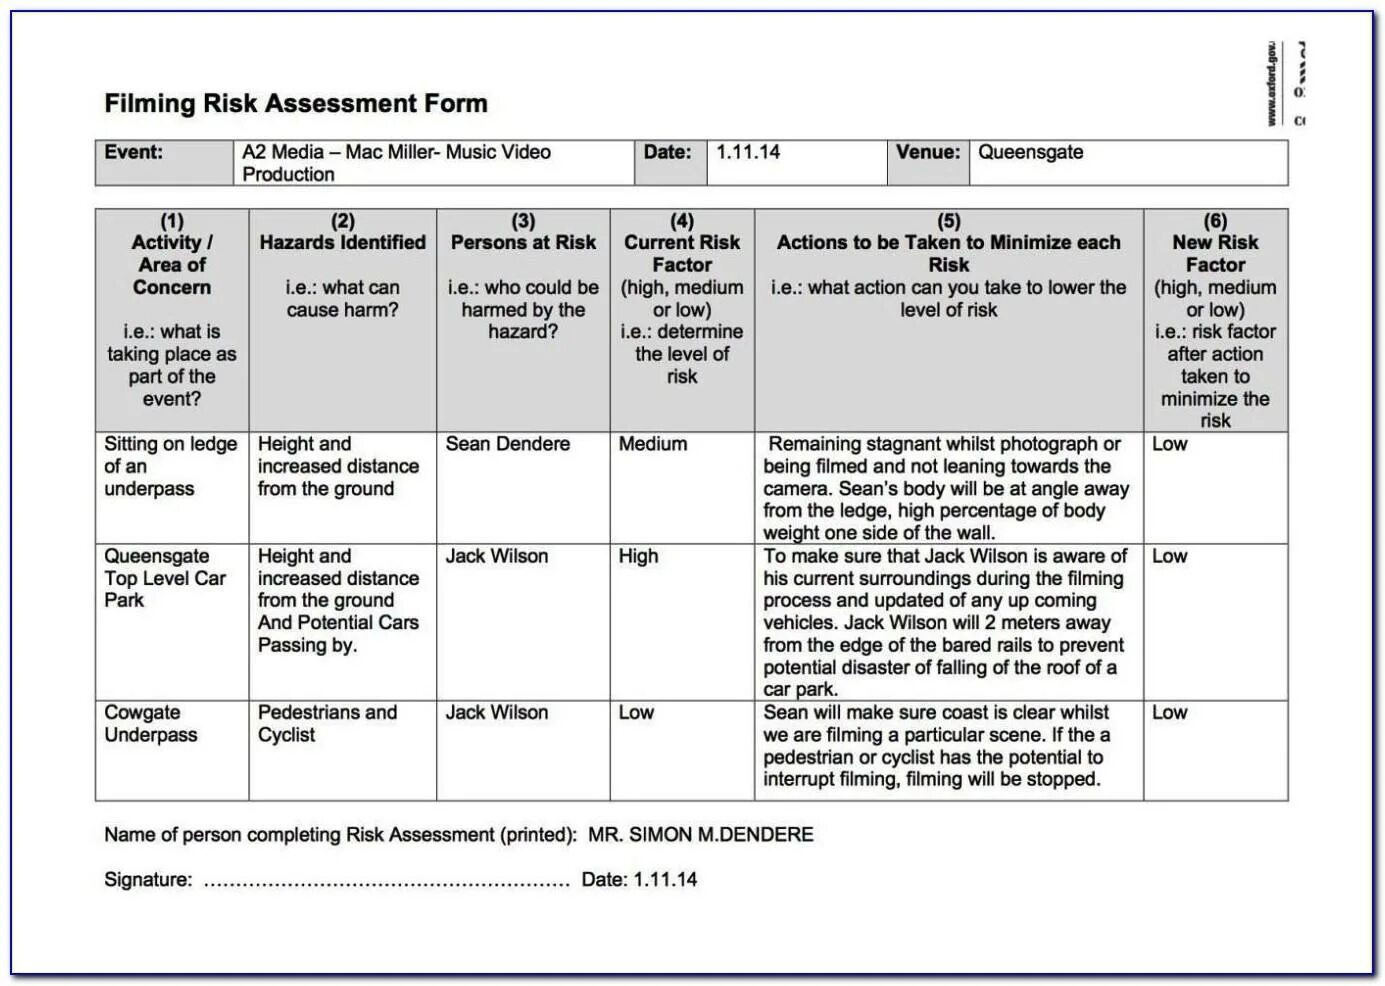 Hazards and risk Assessment. Risk Assessment of event. Production risks. Risk Assessment image. Assessment report